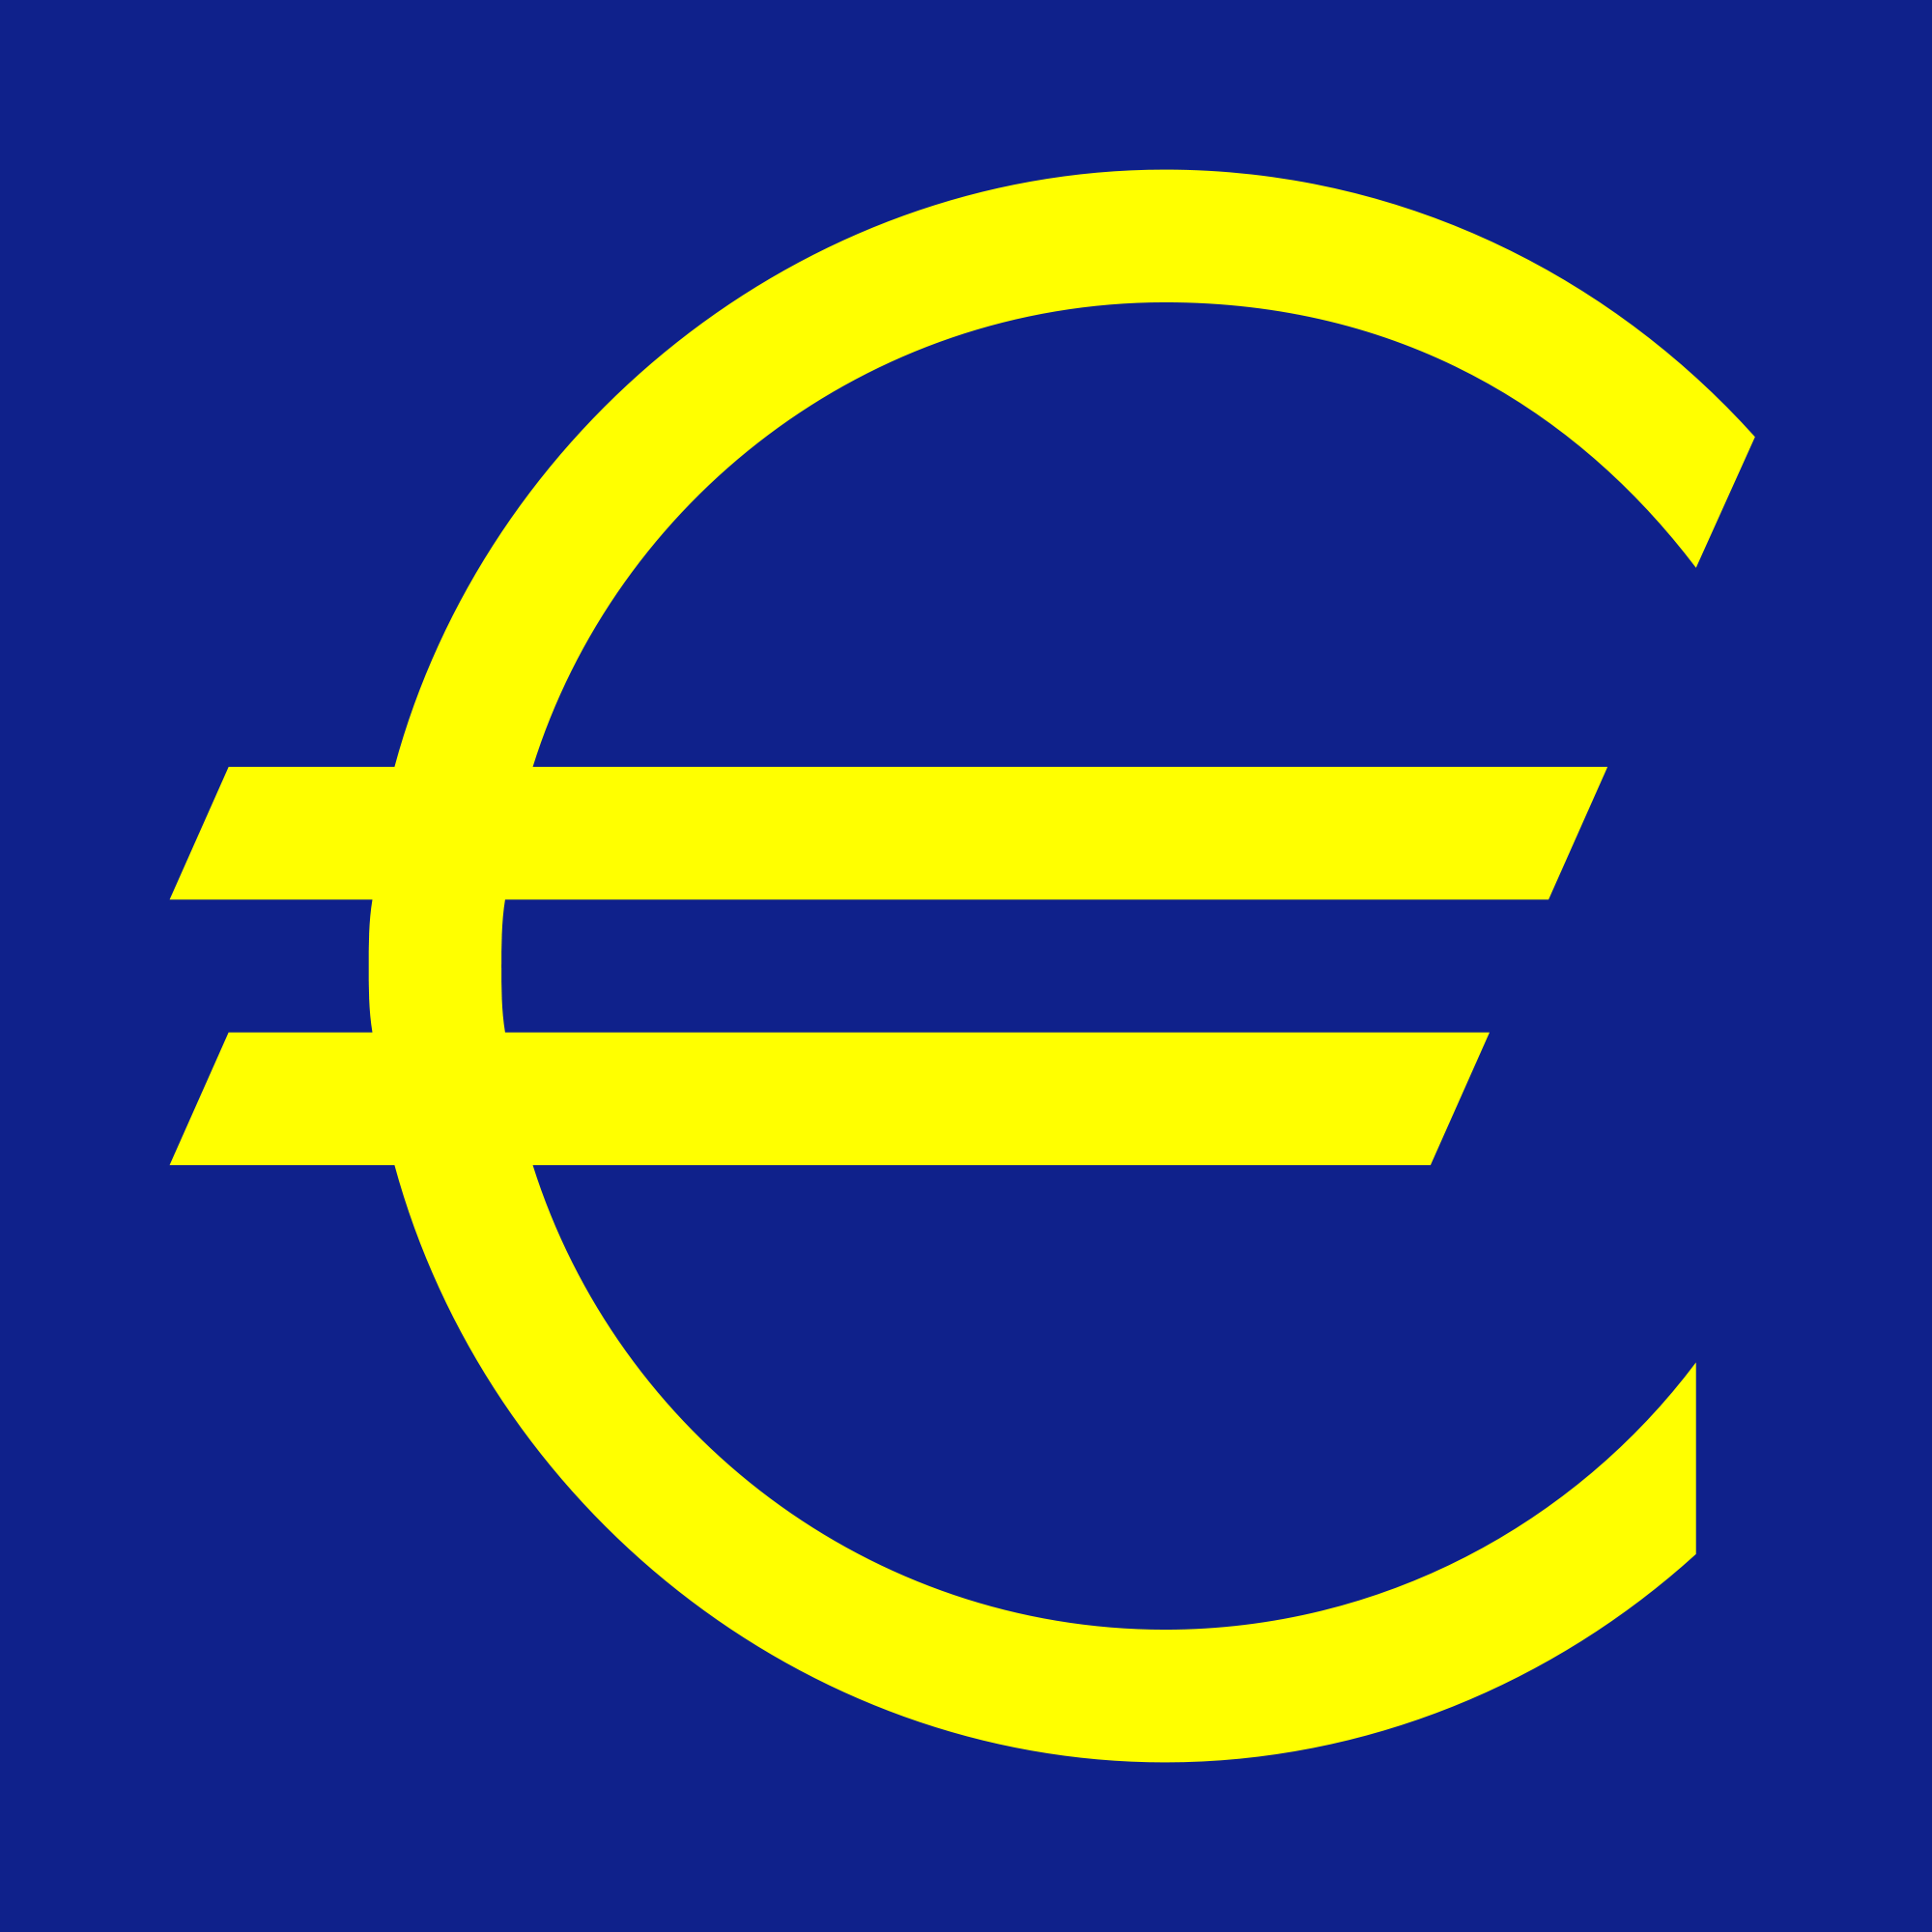 File:Euro symbol.svg - Wikimedia Commons